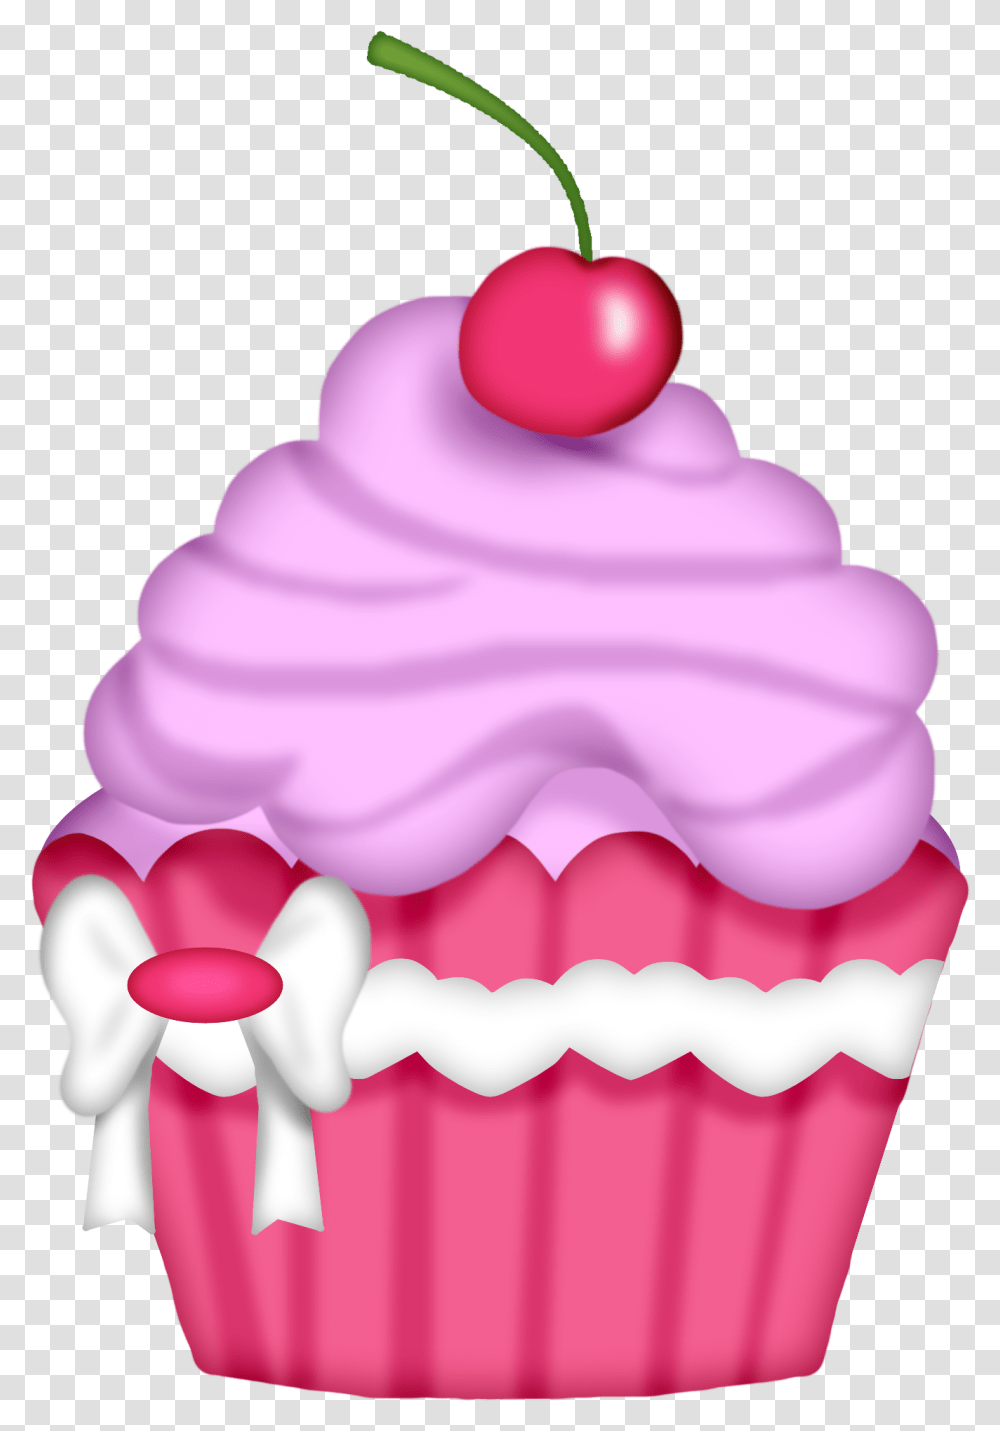 A E B De Orig Mutfak Cupcake Clipart, Cream, Dessert, Food, Creme Transparent Png